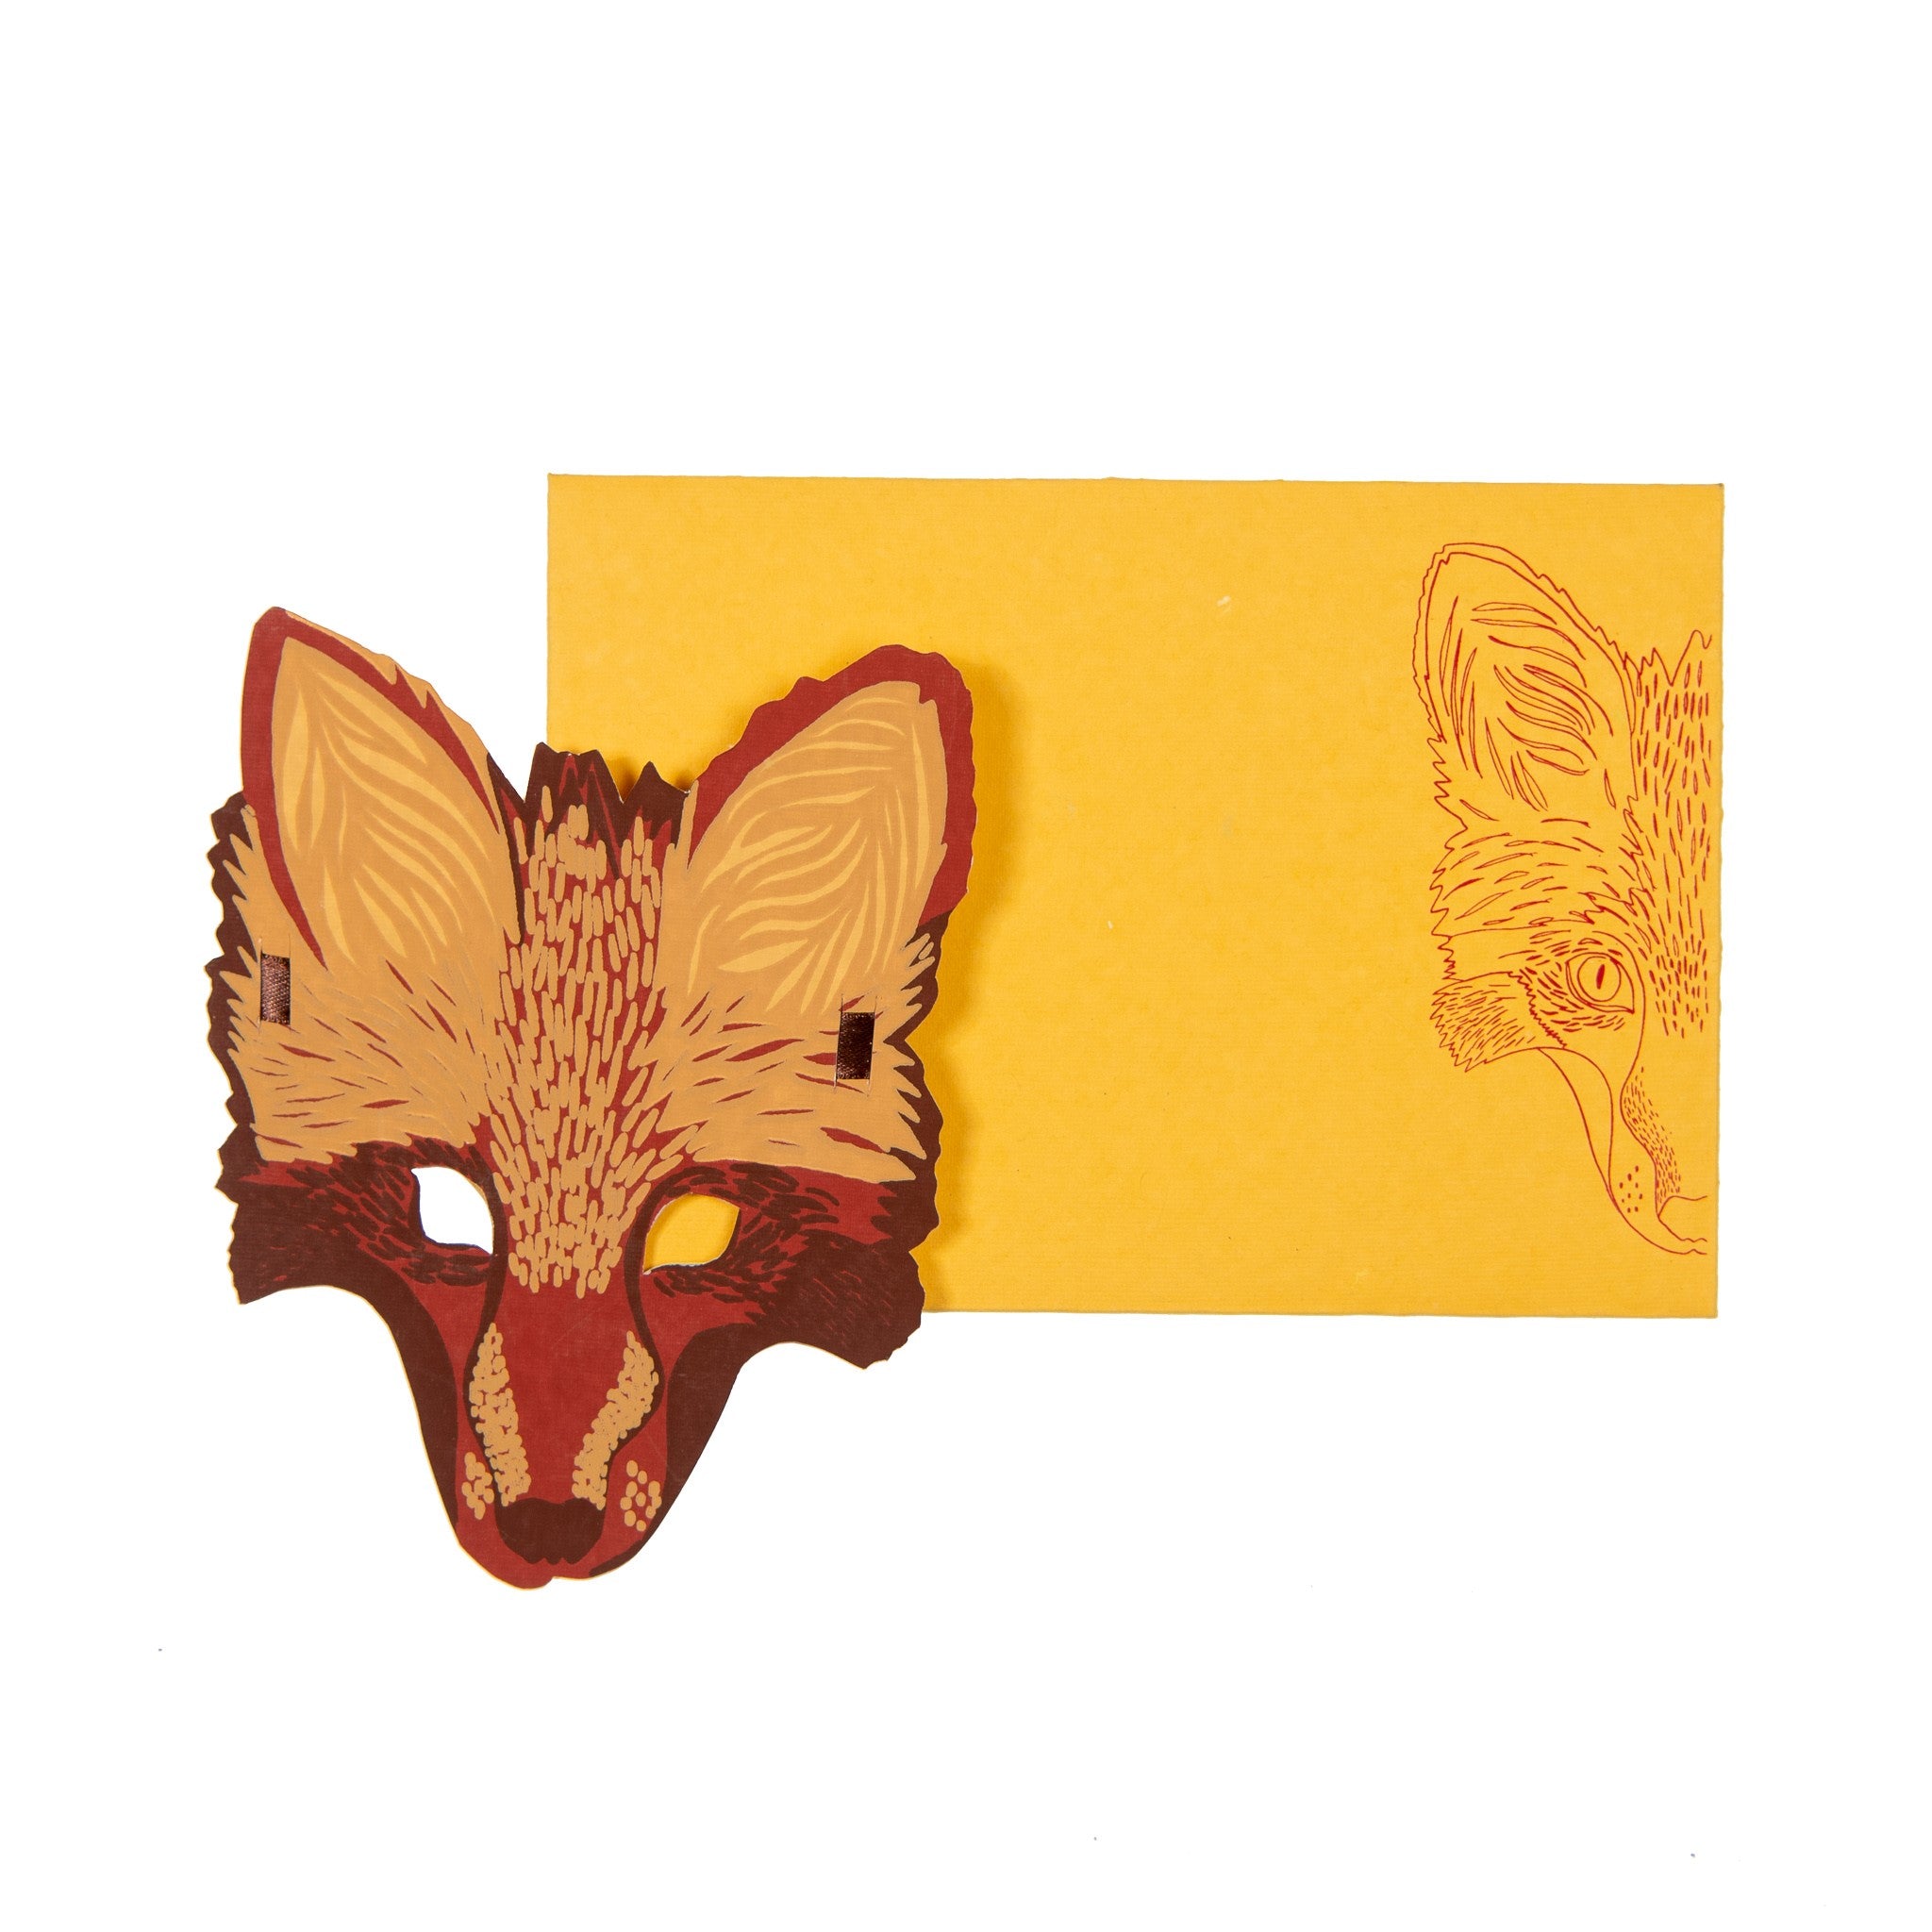 East End Press Fox Mask Greeting Card